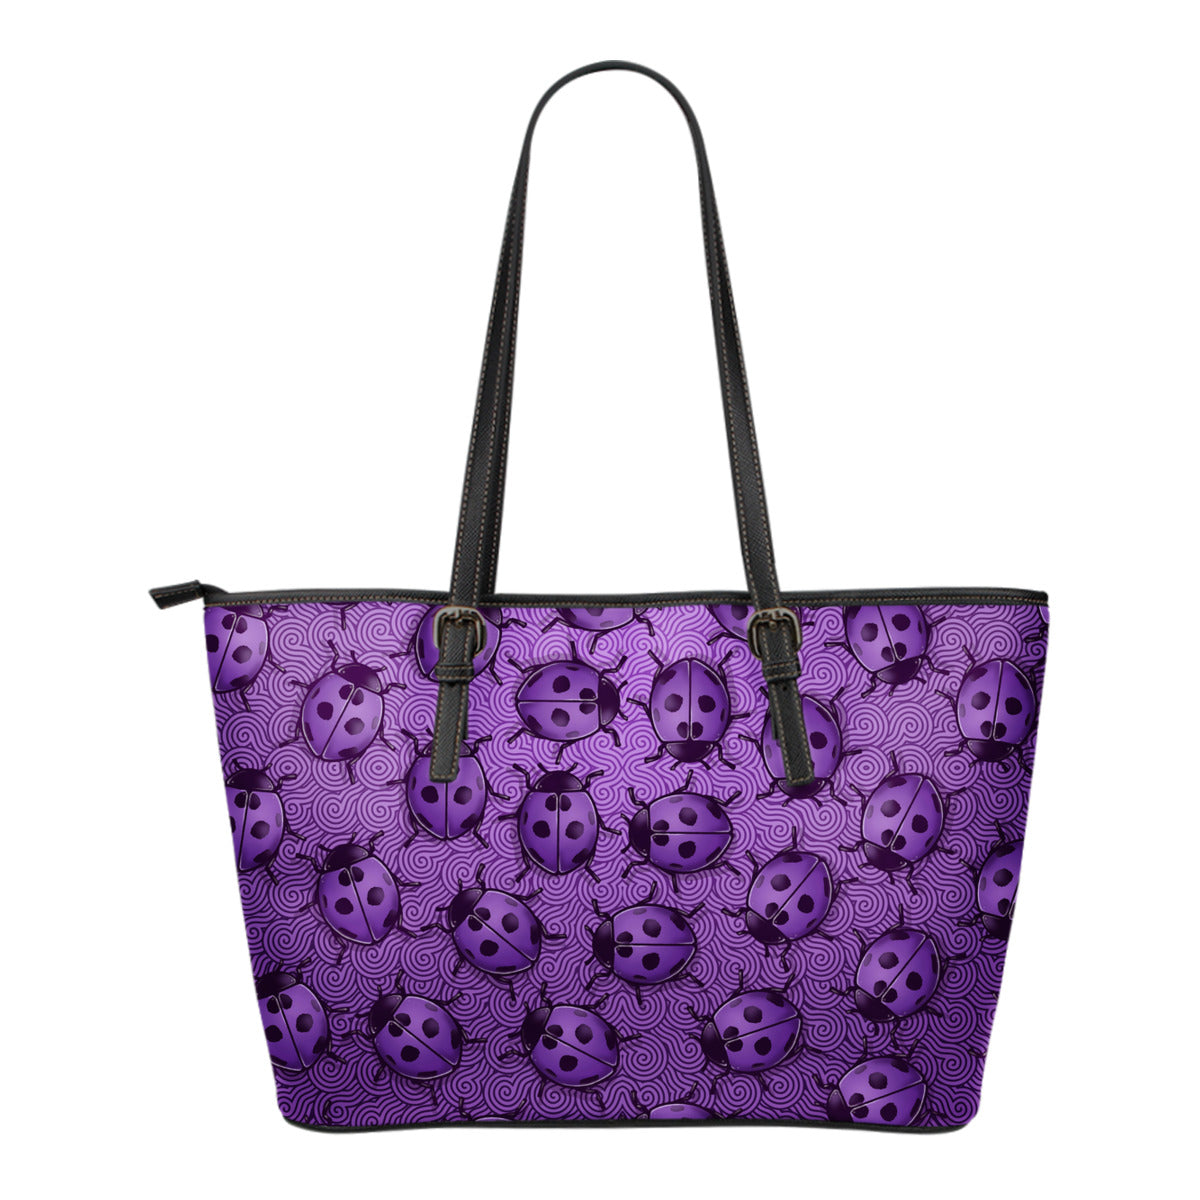 Lady Bug Swirl Small Leather Tote Bag - Purple